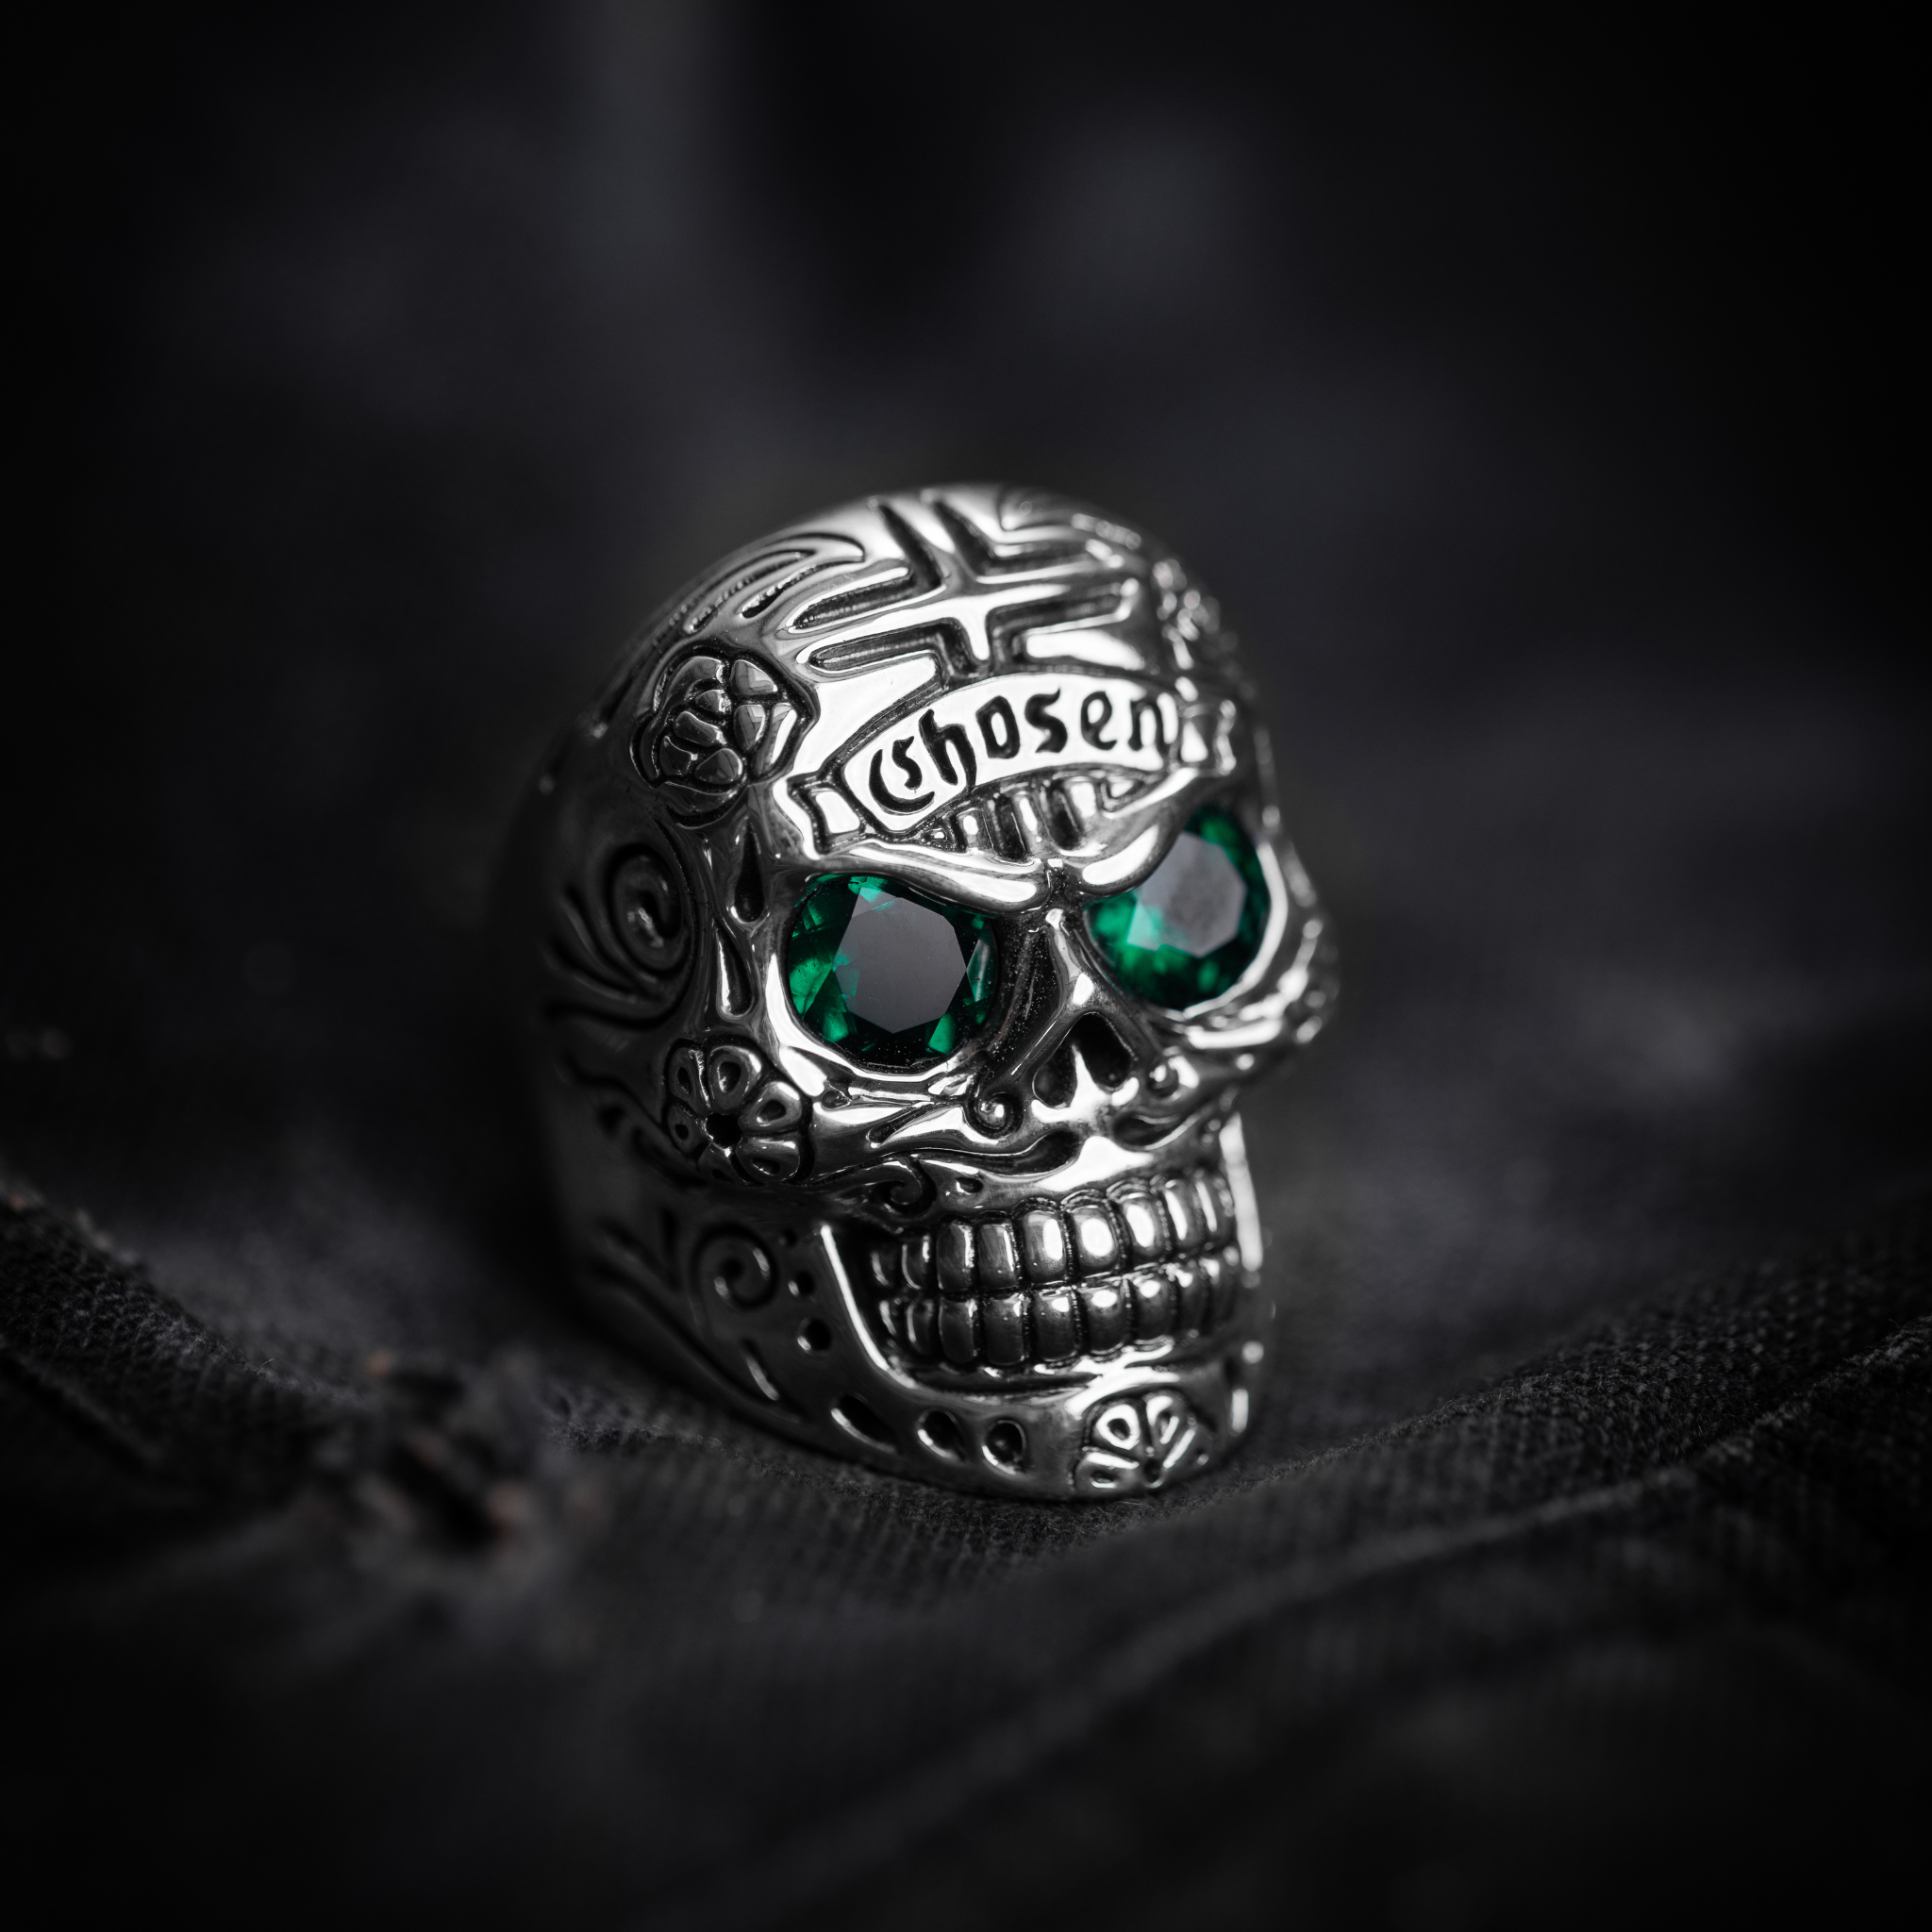 Large Skull Ring with Chosen Cross Detail and Green Emerald Eyes glamour shot on black denim